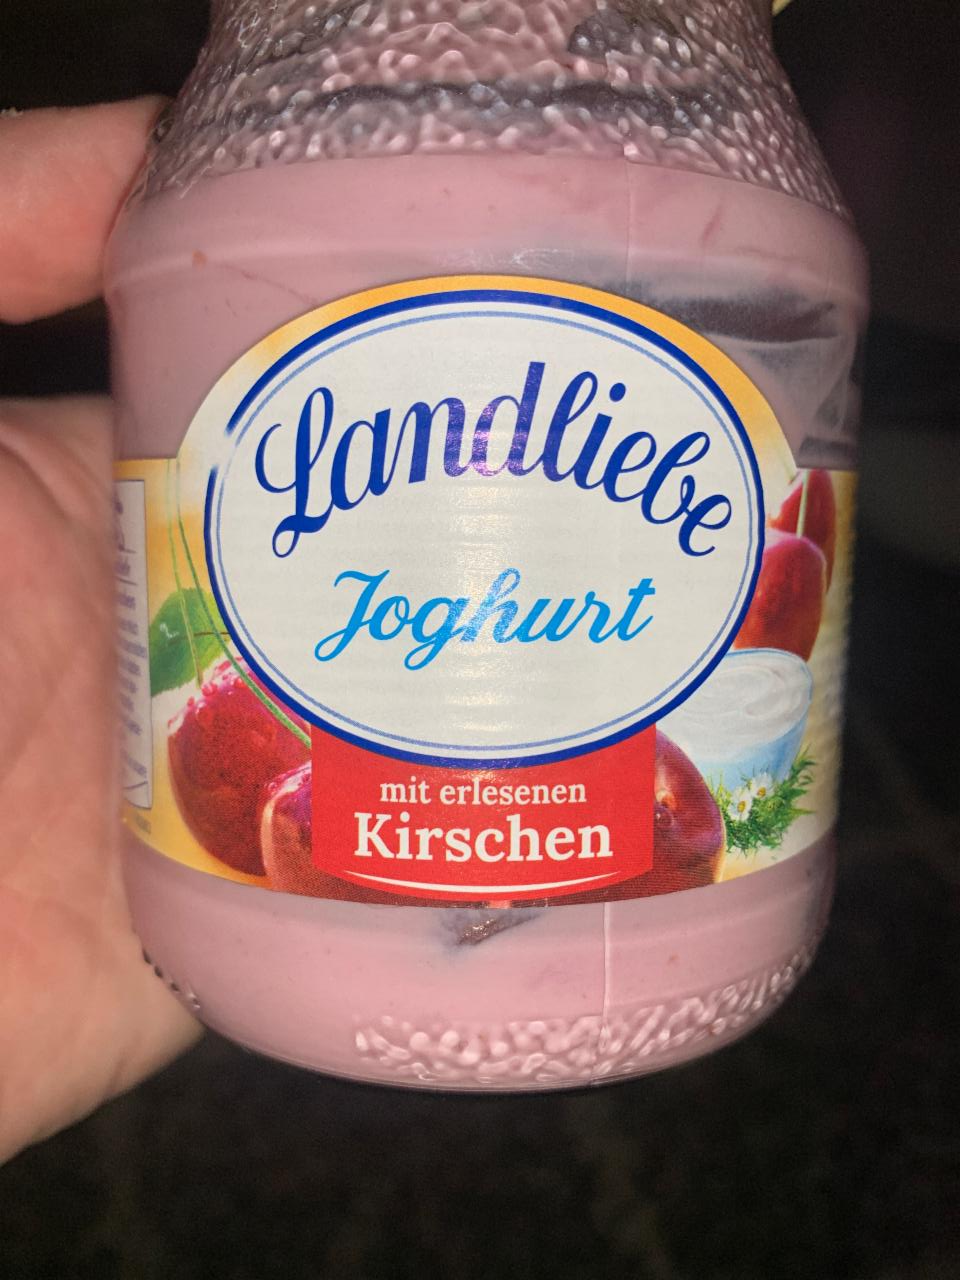 Landliebe Joghurt a - nutričné hodnoty Kirschen kJ kalórie